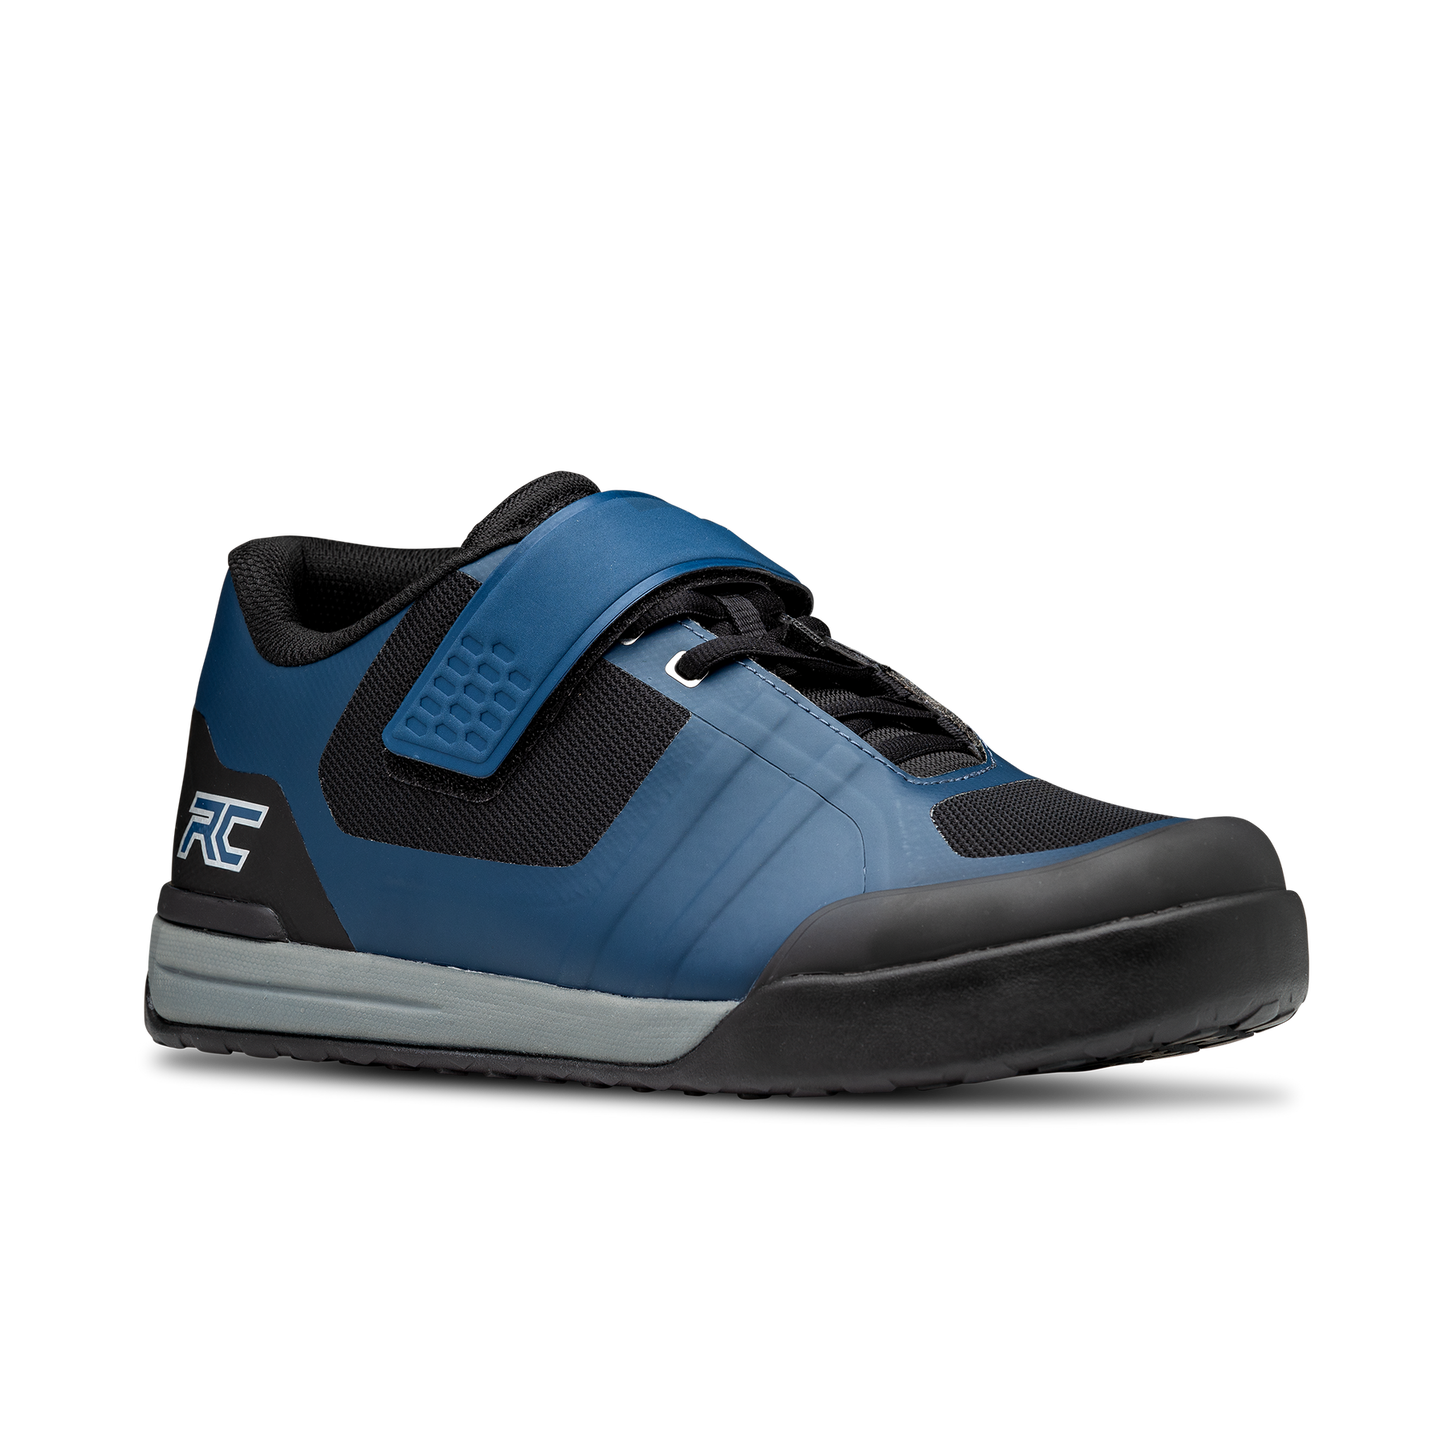 Ride Concepts Transition Spd Shoes - US 12.5 - Marine Blue - Image 1